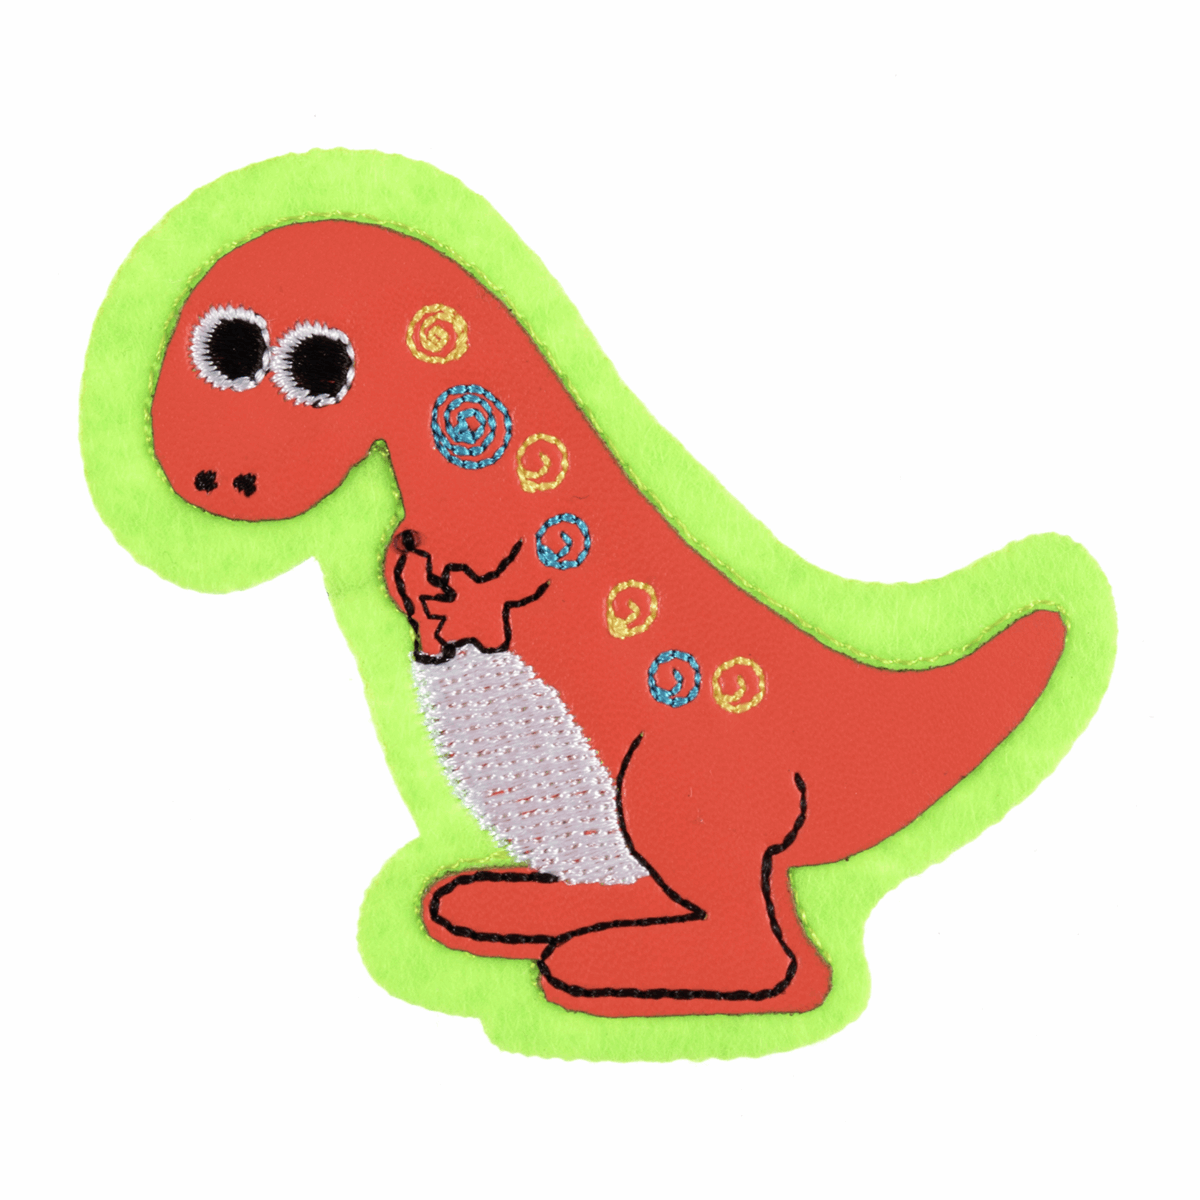 Iron-On/Sew On Motif Patch - Orange Dinosaur